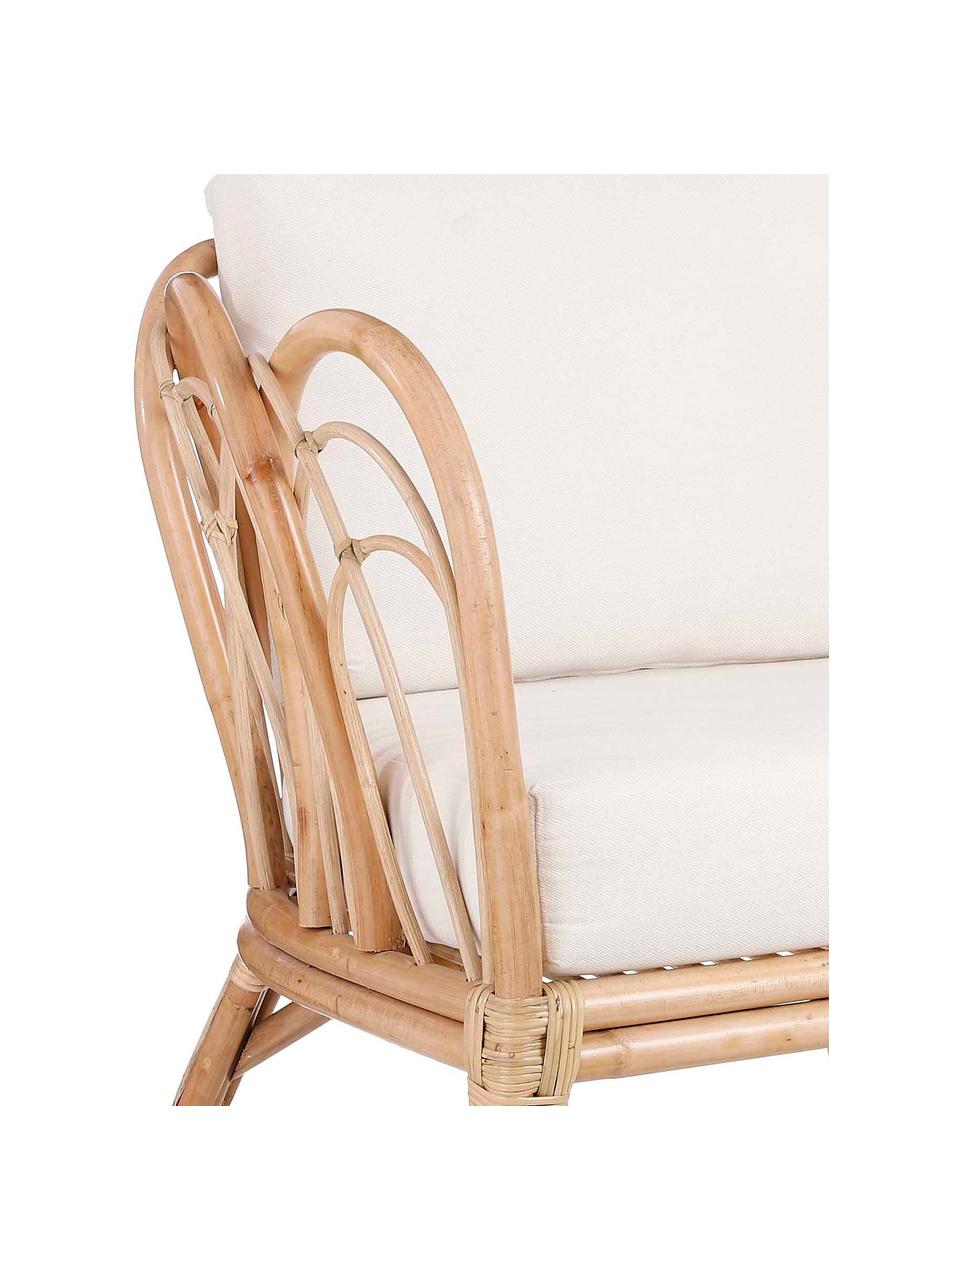 Rotan stoel Sherbrooke in lichtbruin met kussen, Lichtbruin, wit, B 83 x D 72 cm